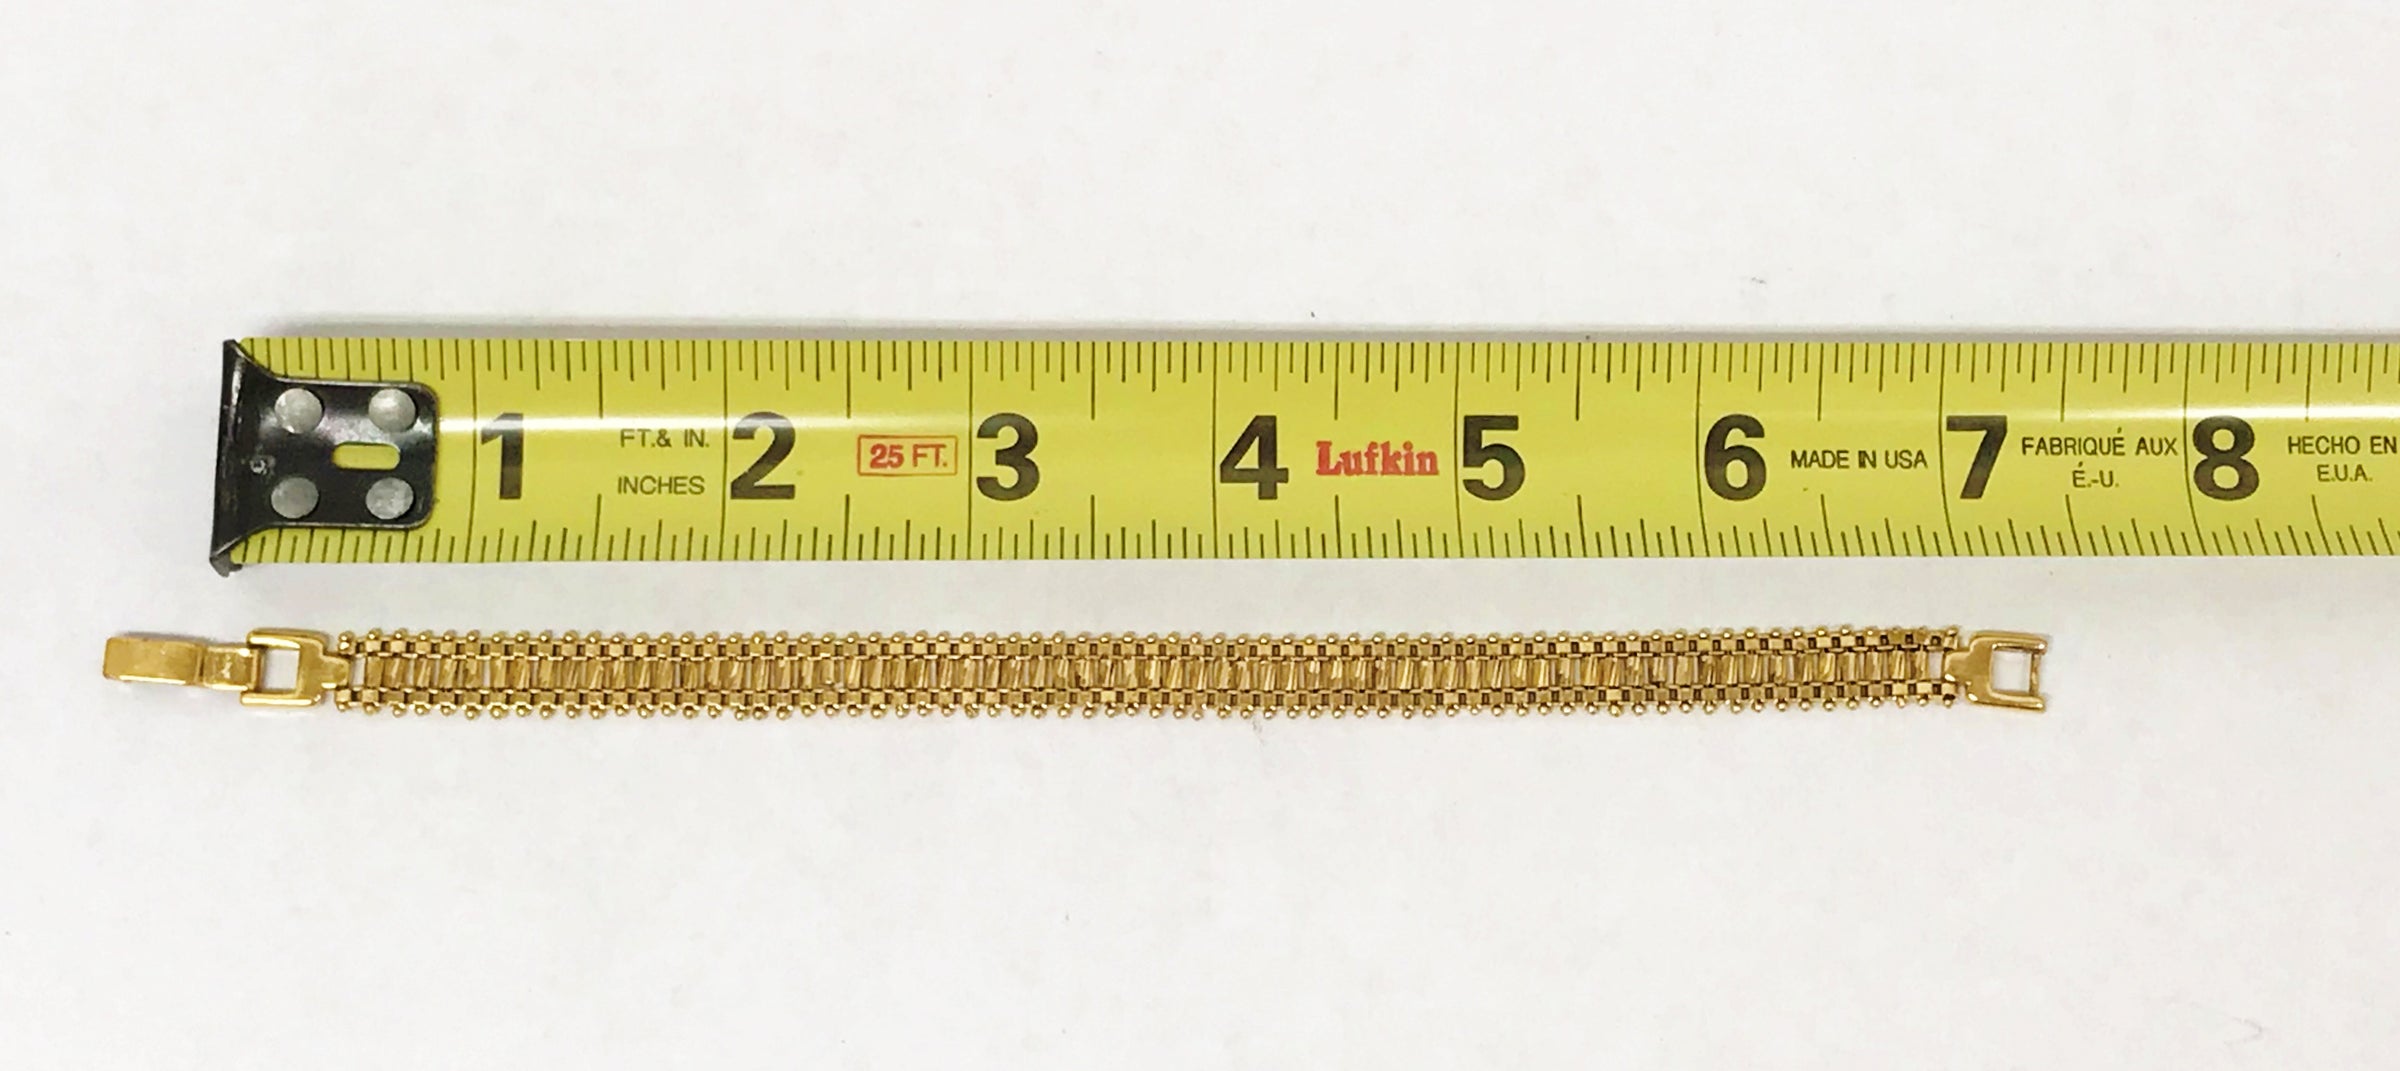 www.hersandhistreasures.com/products/1980s-lifetime-jewelry-riccio-bar-gold-tone-bracelet-7-25